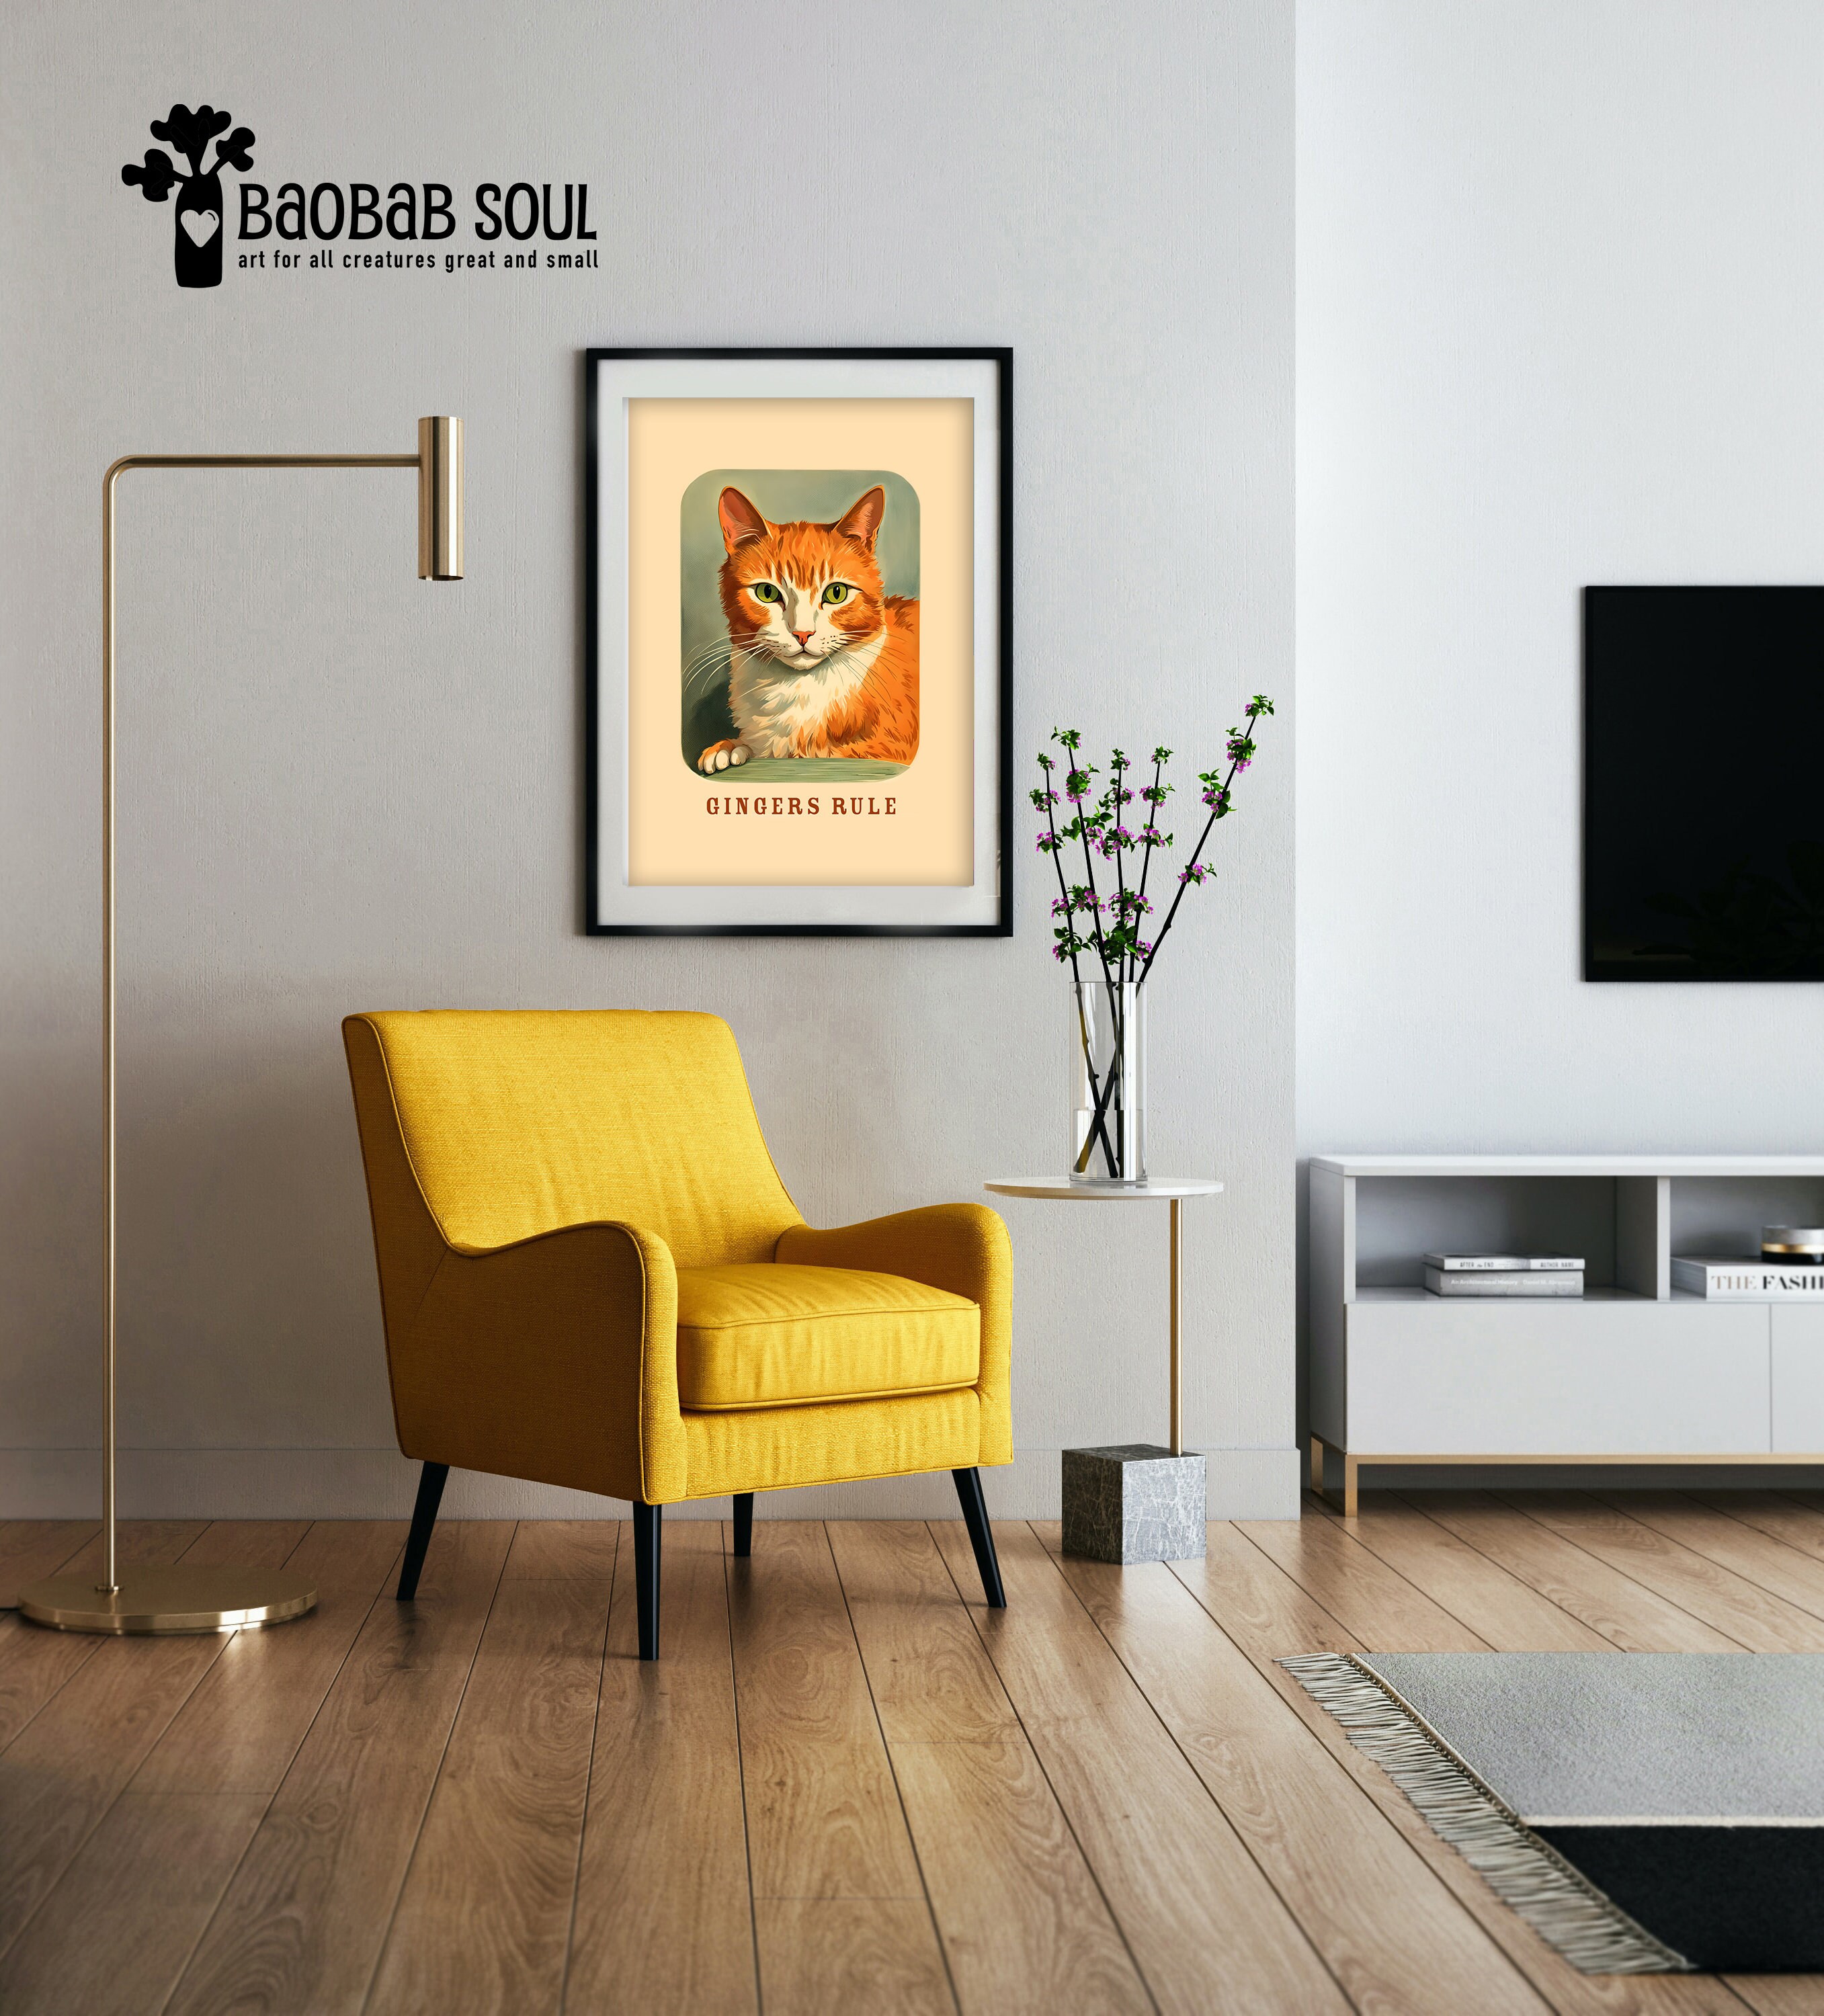 Discover Gingers Rule Vintage Ginger Cat Premium Matte Vertical Poster